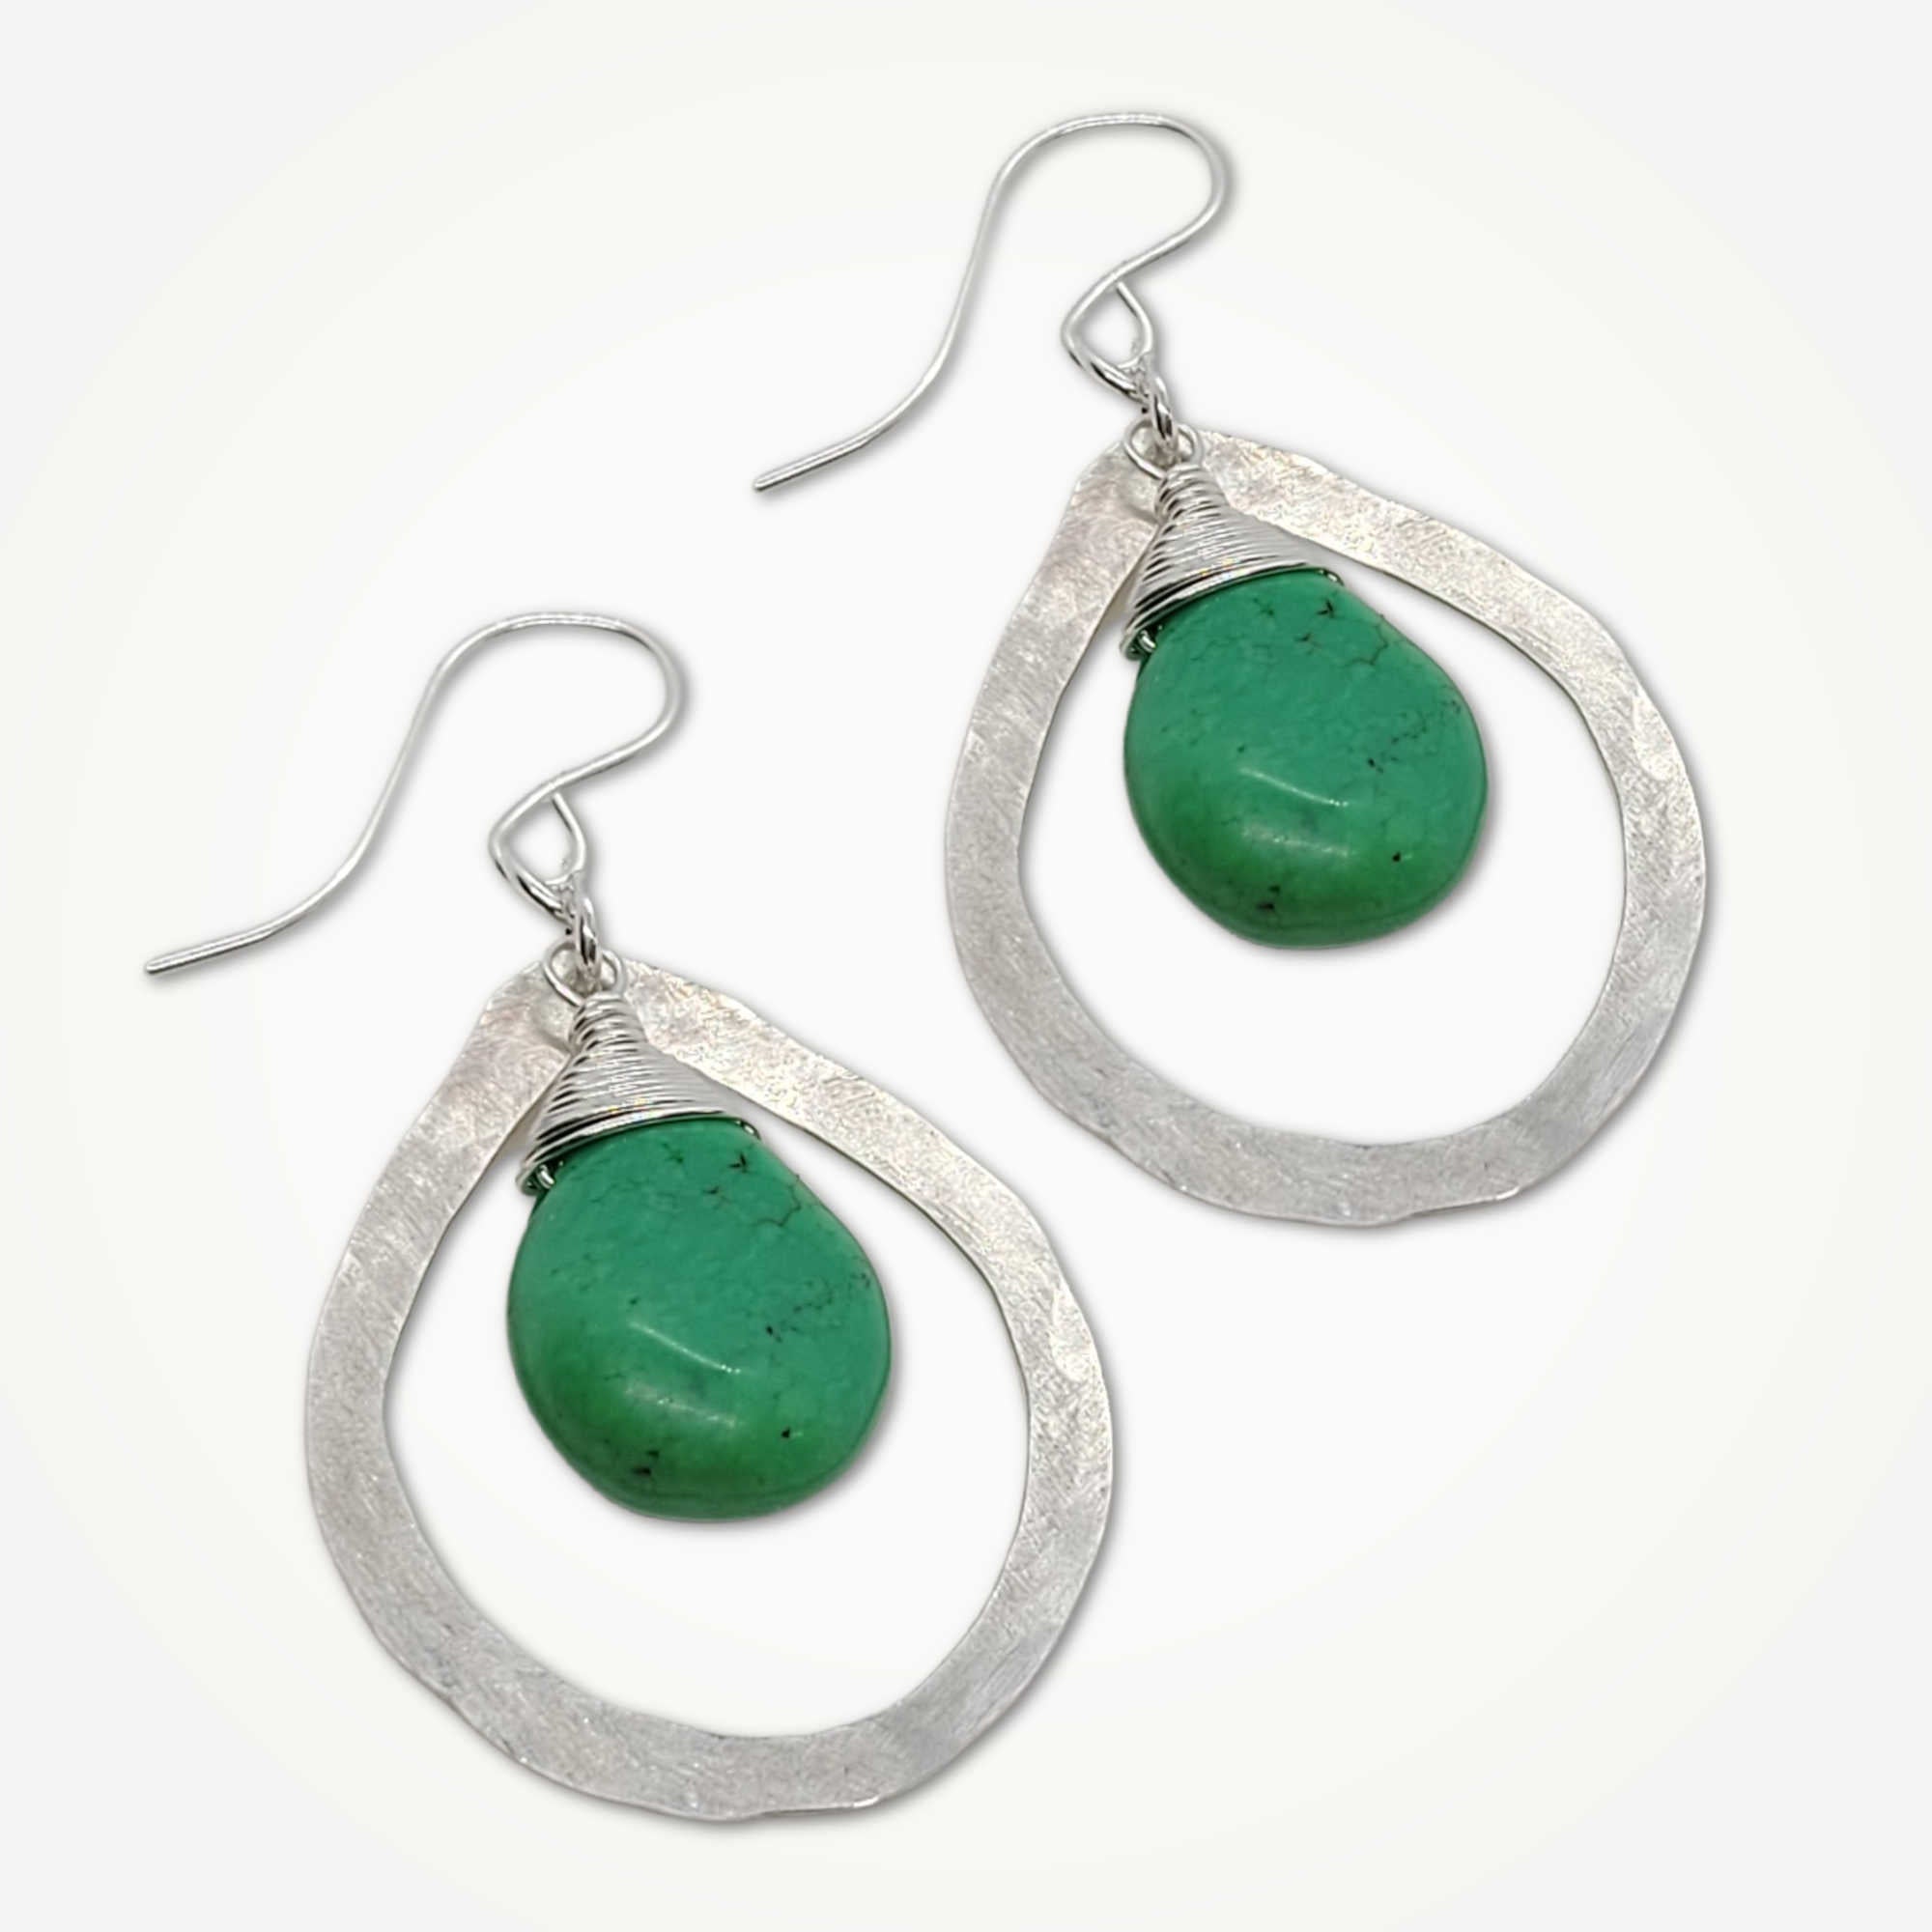 Organic Teardrop Earrings • Green Turquoise